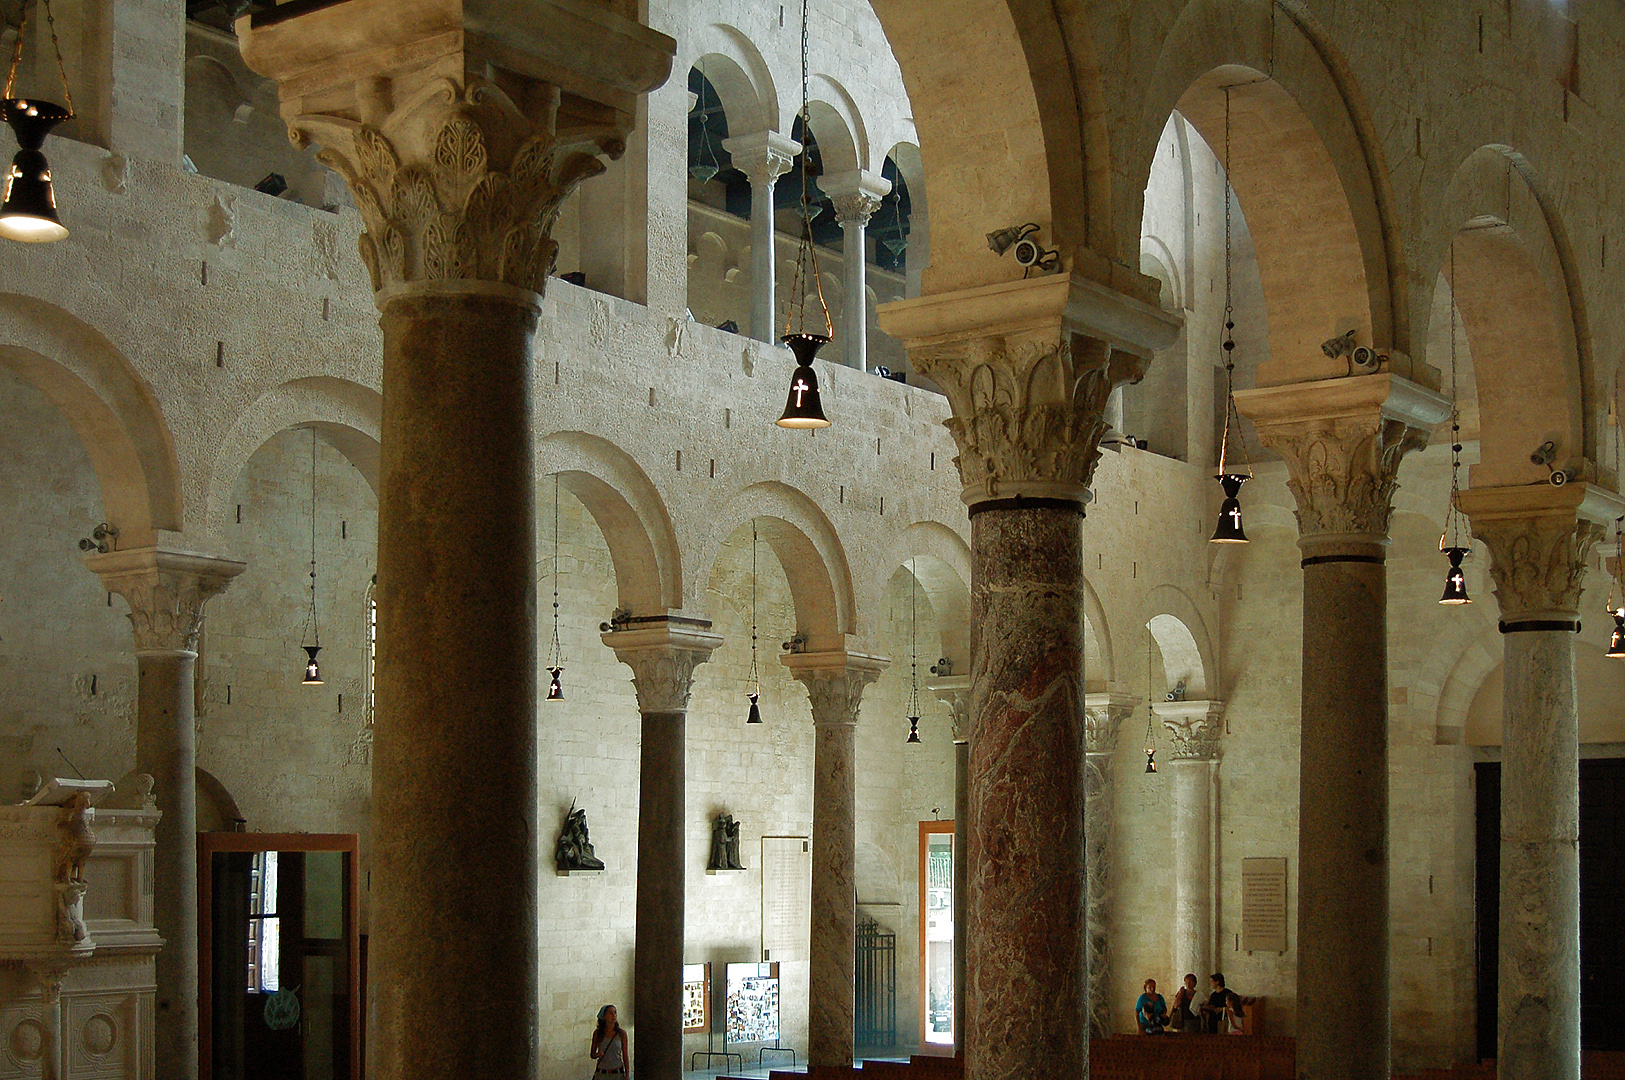 Kathedraal van Bari (Apuli, Itali), Bari Cathedral (Apulia, Italy)